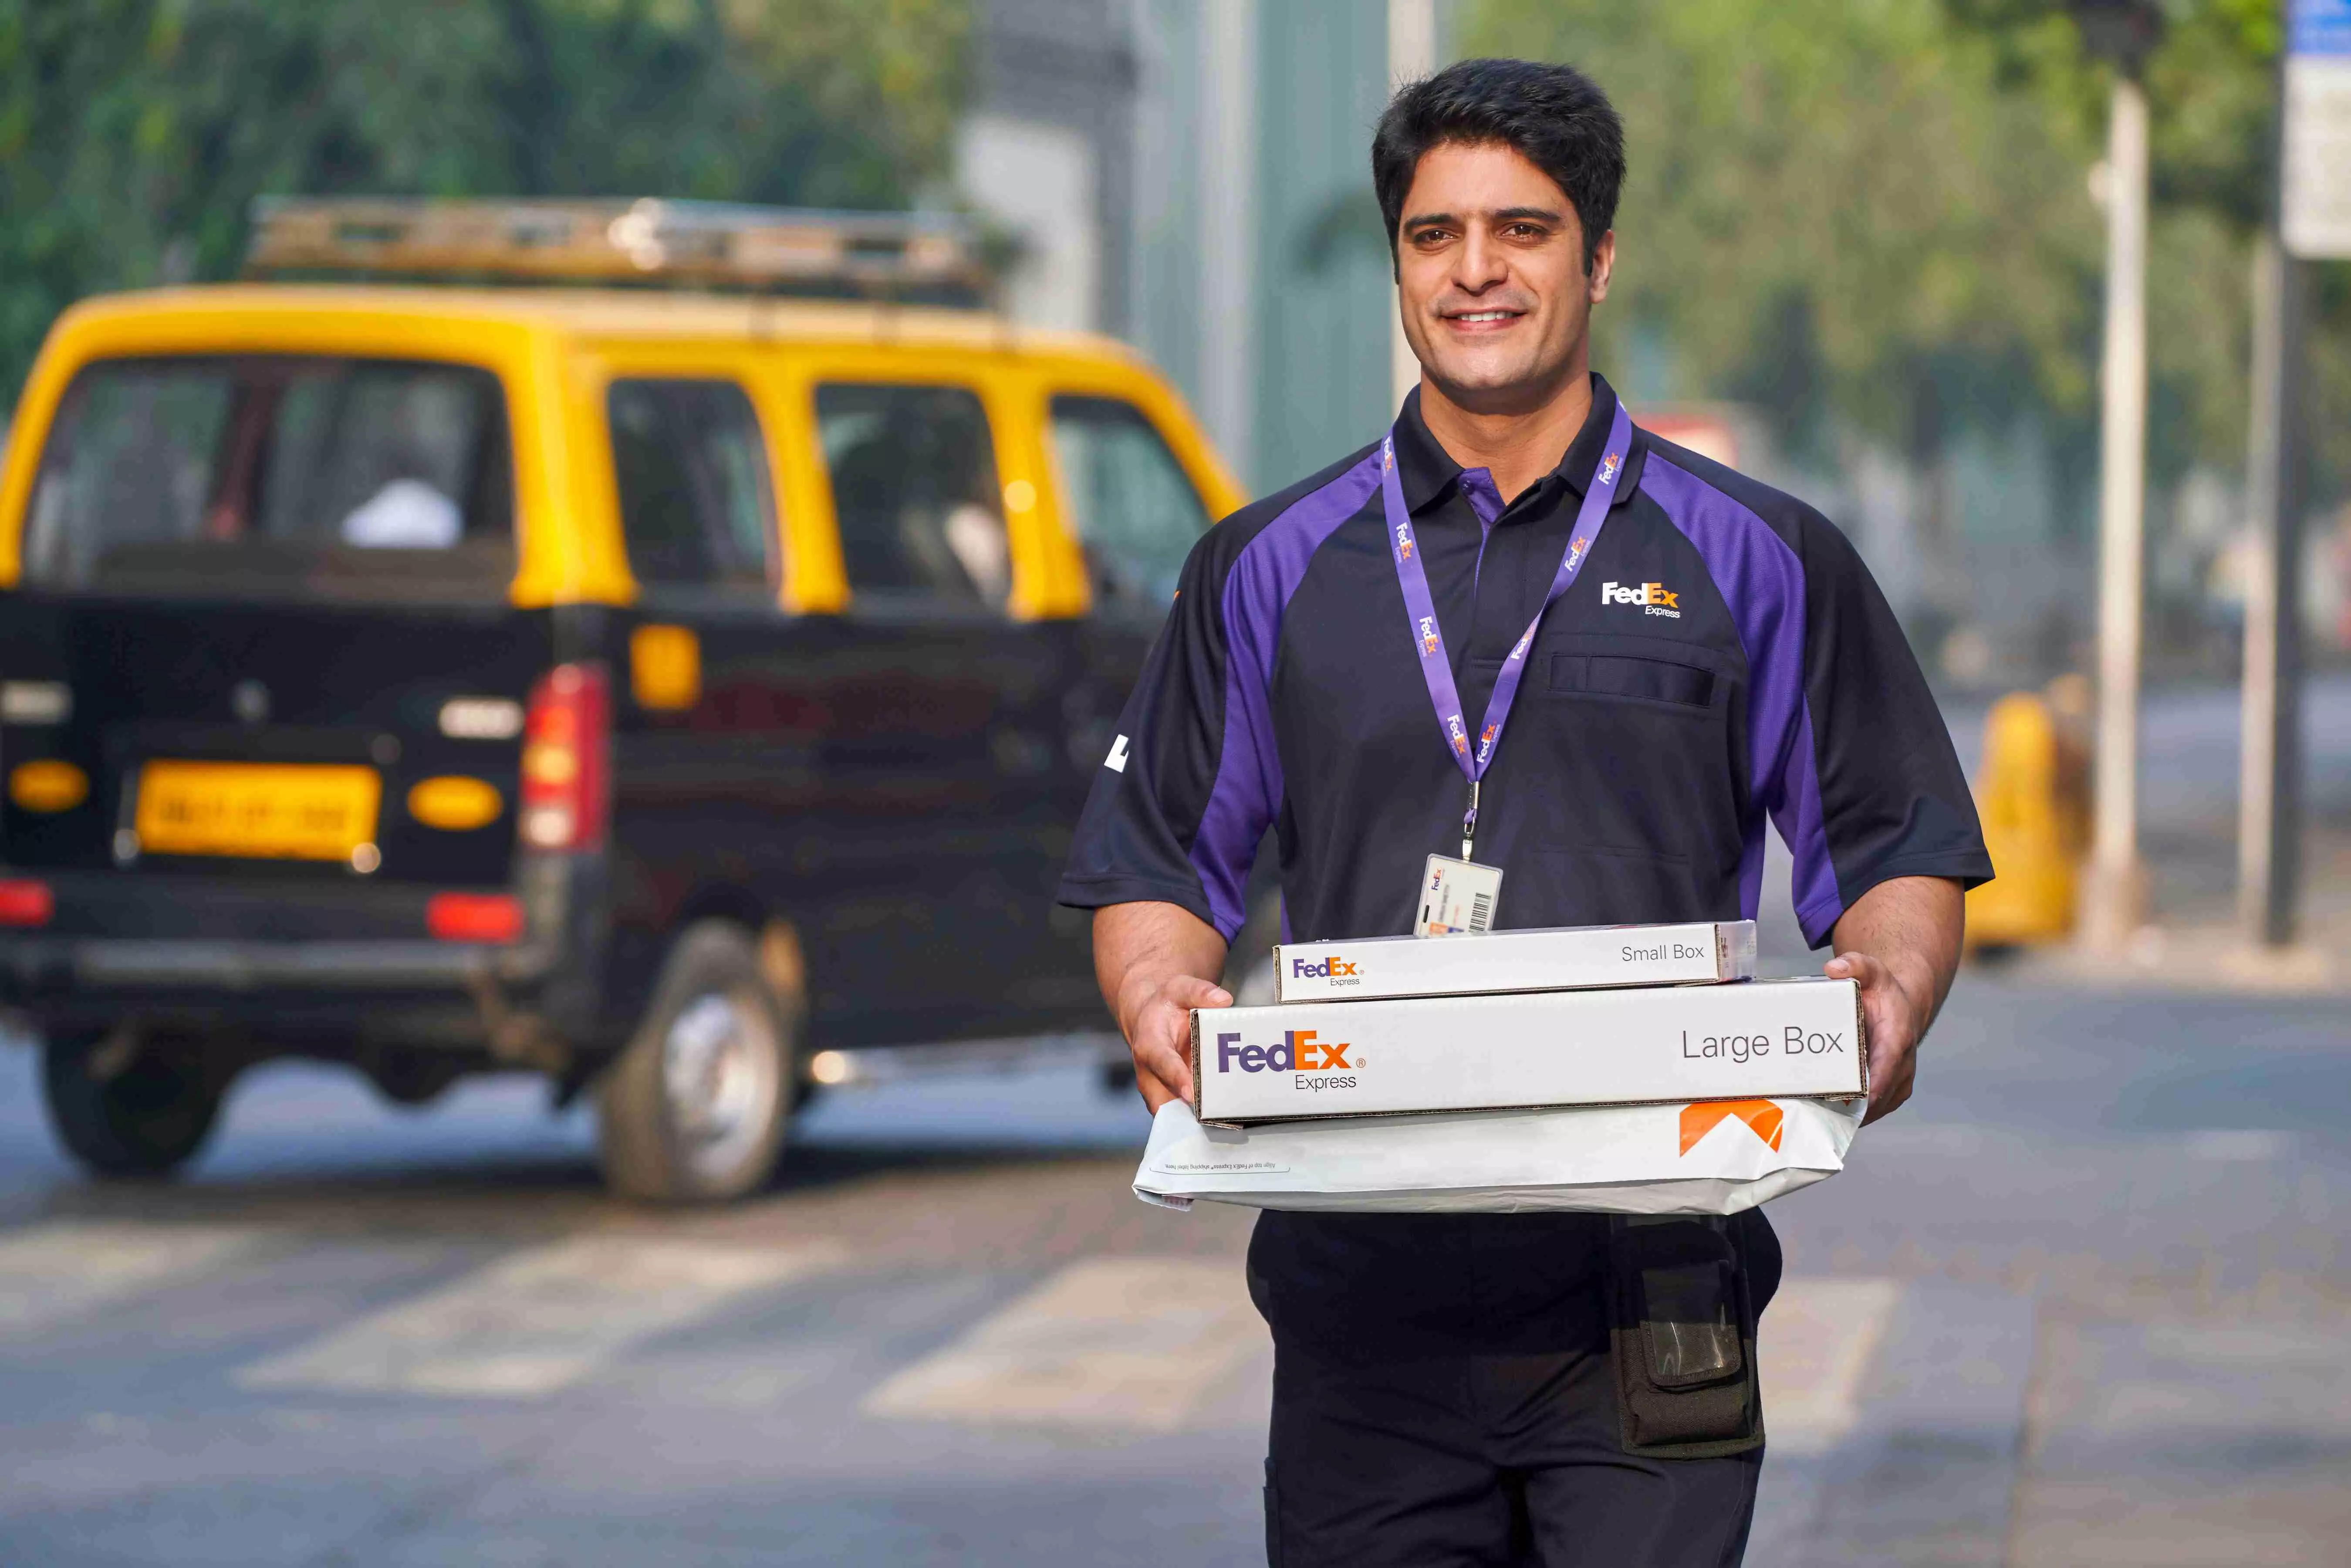 FedEx improves the International Priority service